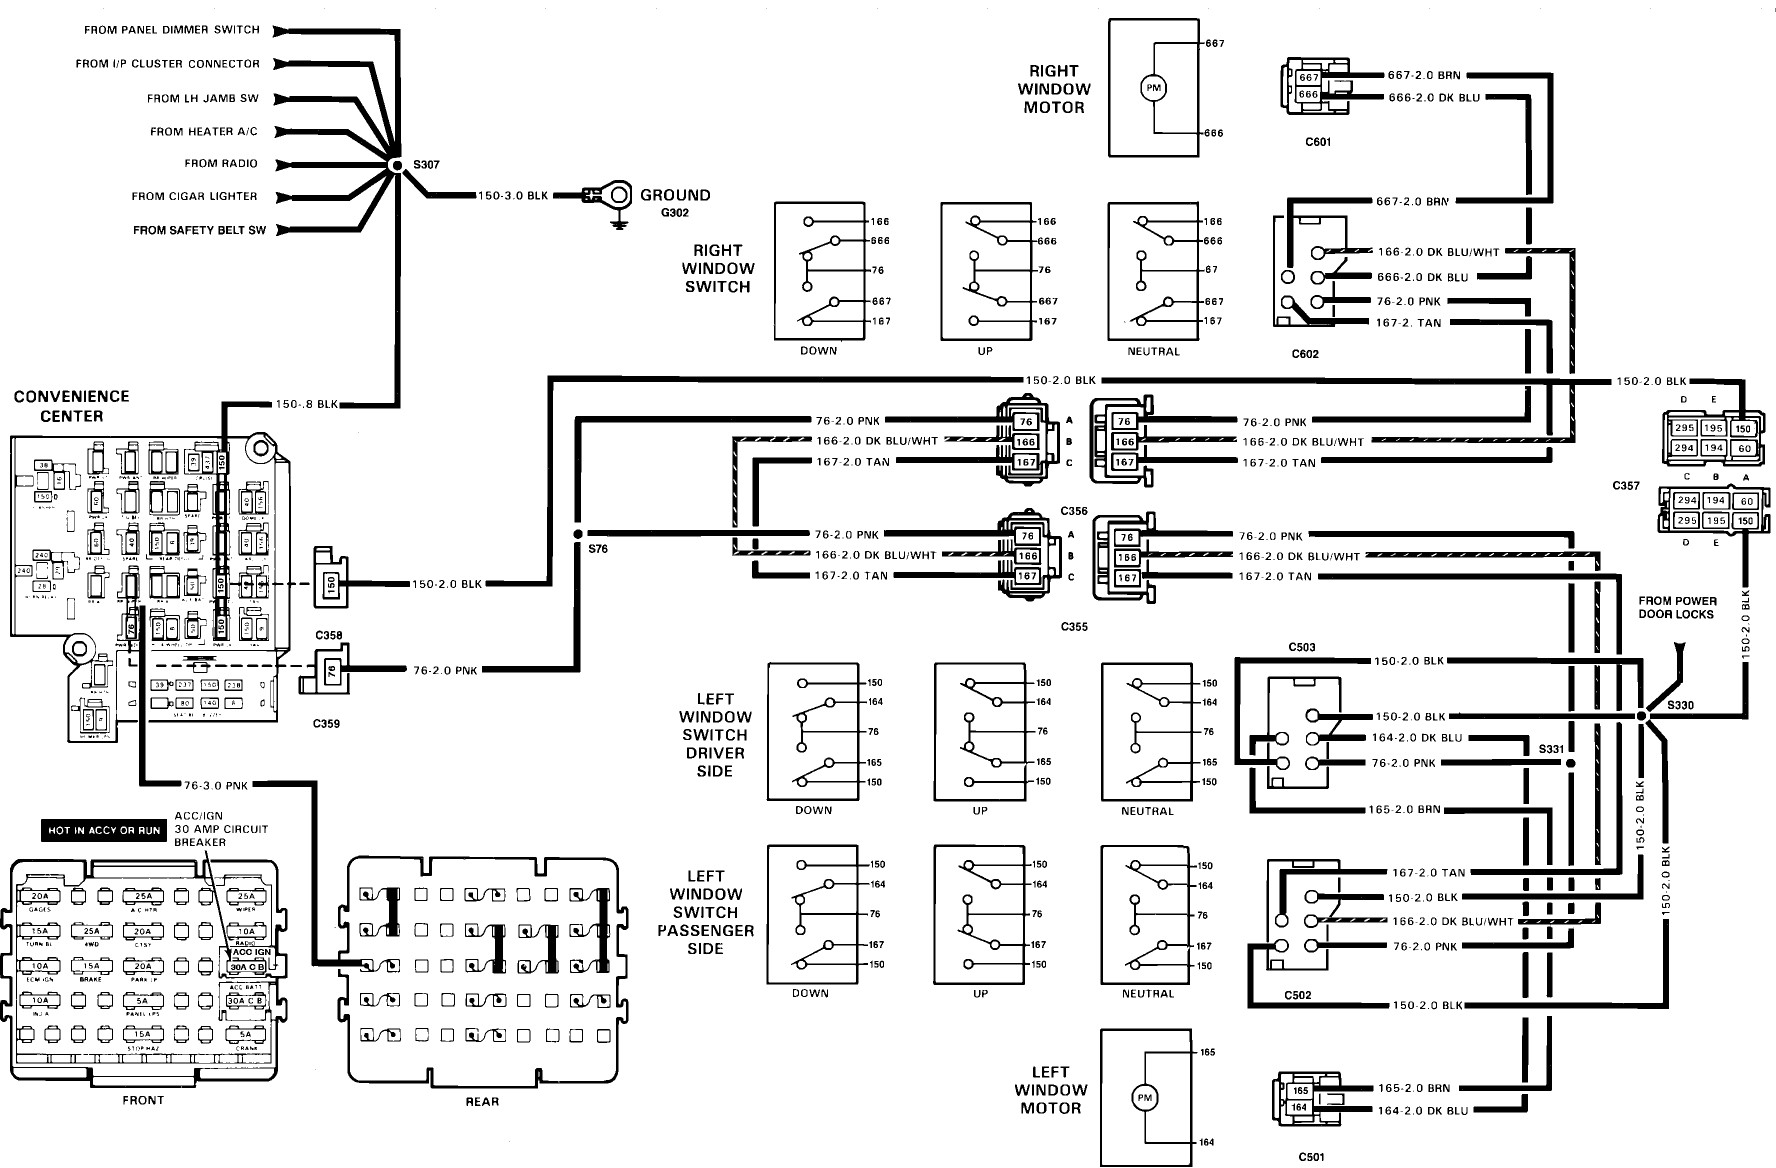 Chevy Suburban Parts Diagram Suburban Parts Diagram Besides Gm Bulkhead Connector Wiring Diagram Of Chevy Suburban Parts Diagram